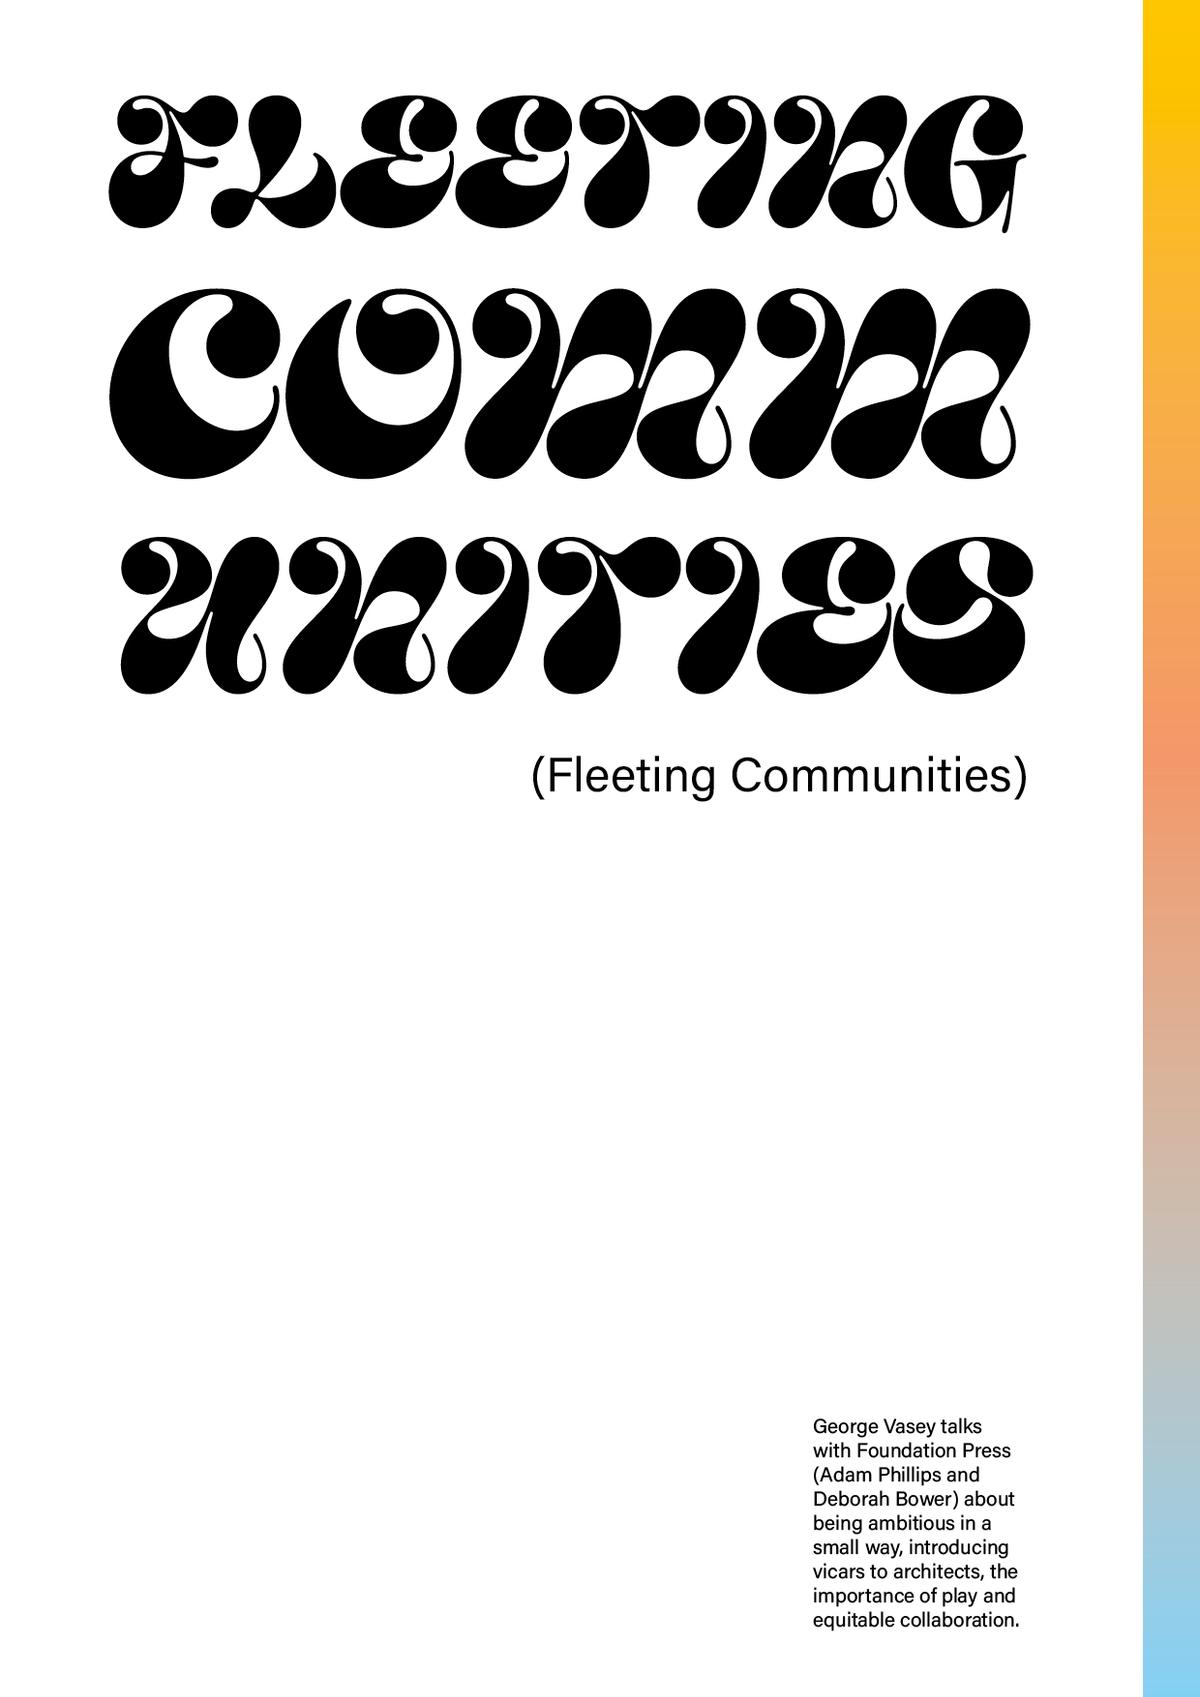 Fleeting Communities: A conversation between George Vasey & Foundation Press